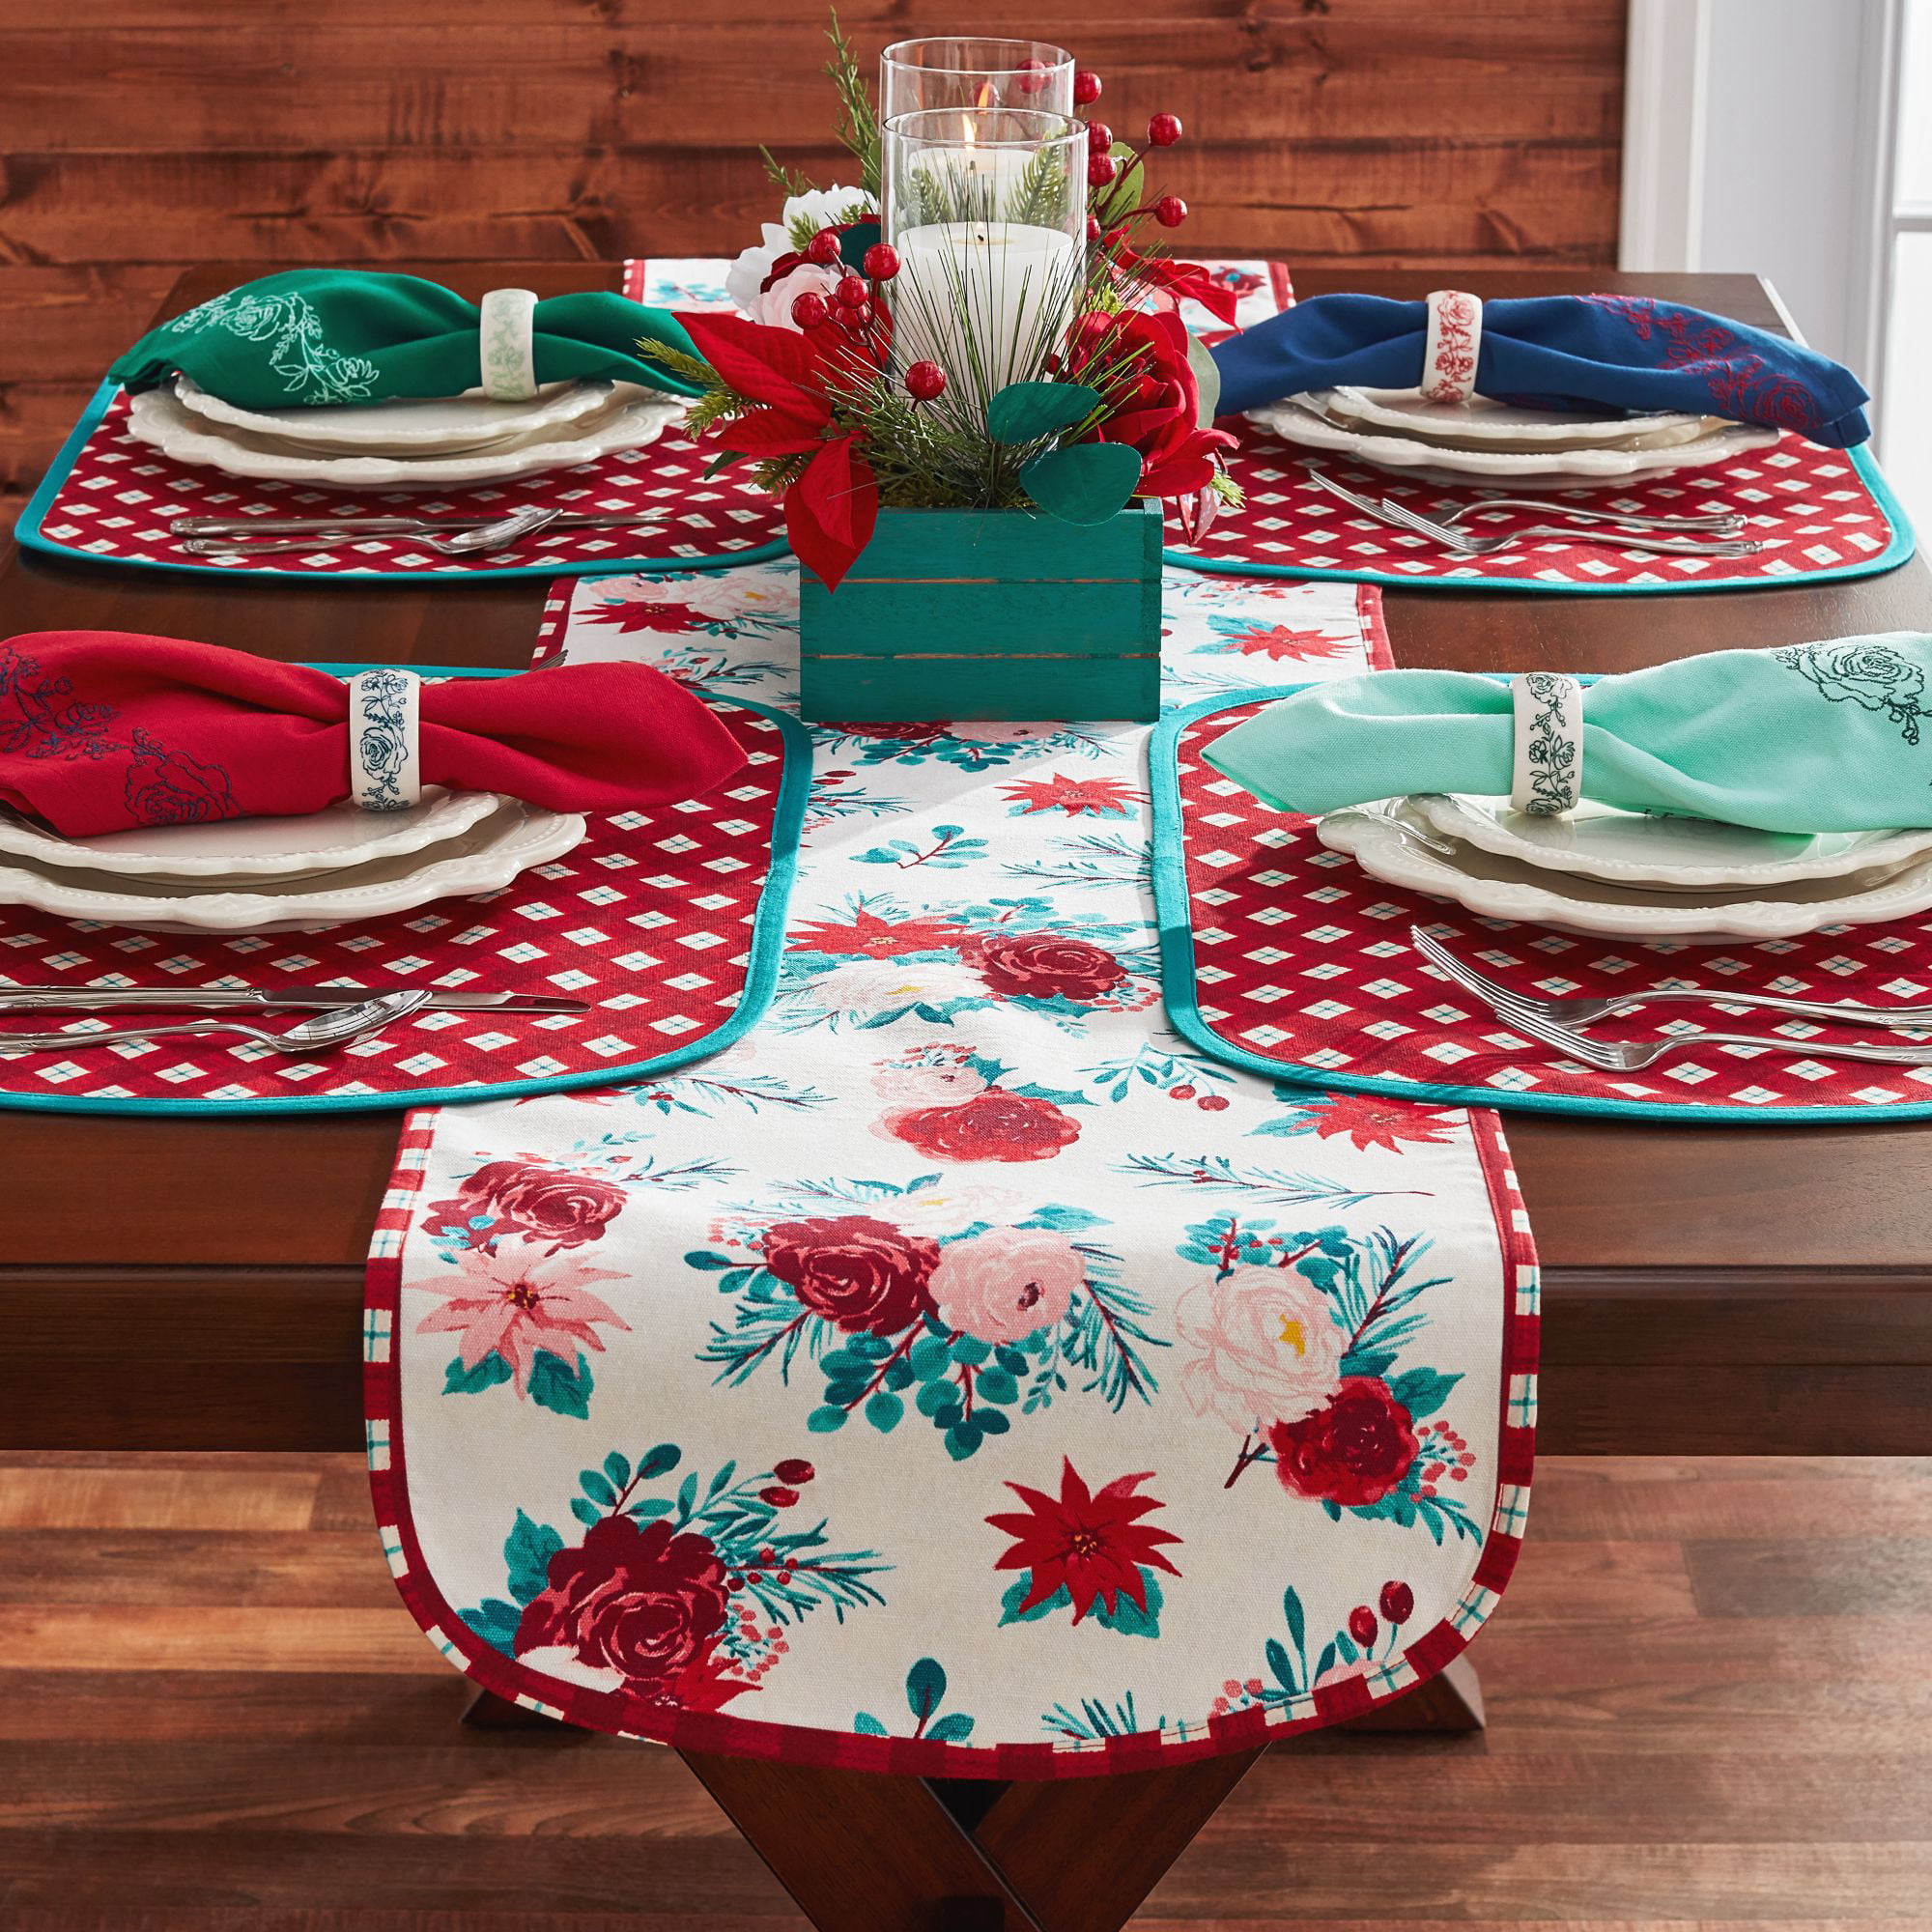 The Pioneer Woman Christmas Plates, Napkins, Bowls, Tablecloth